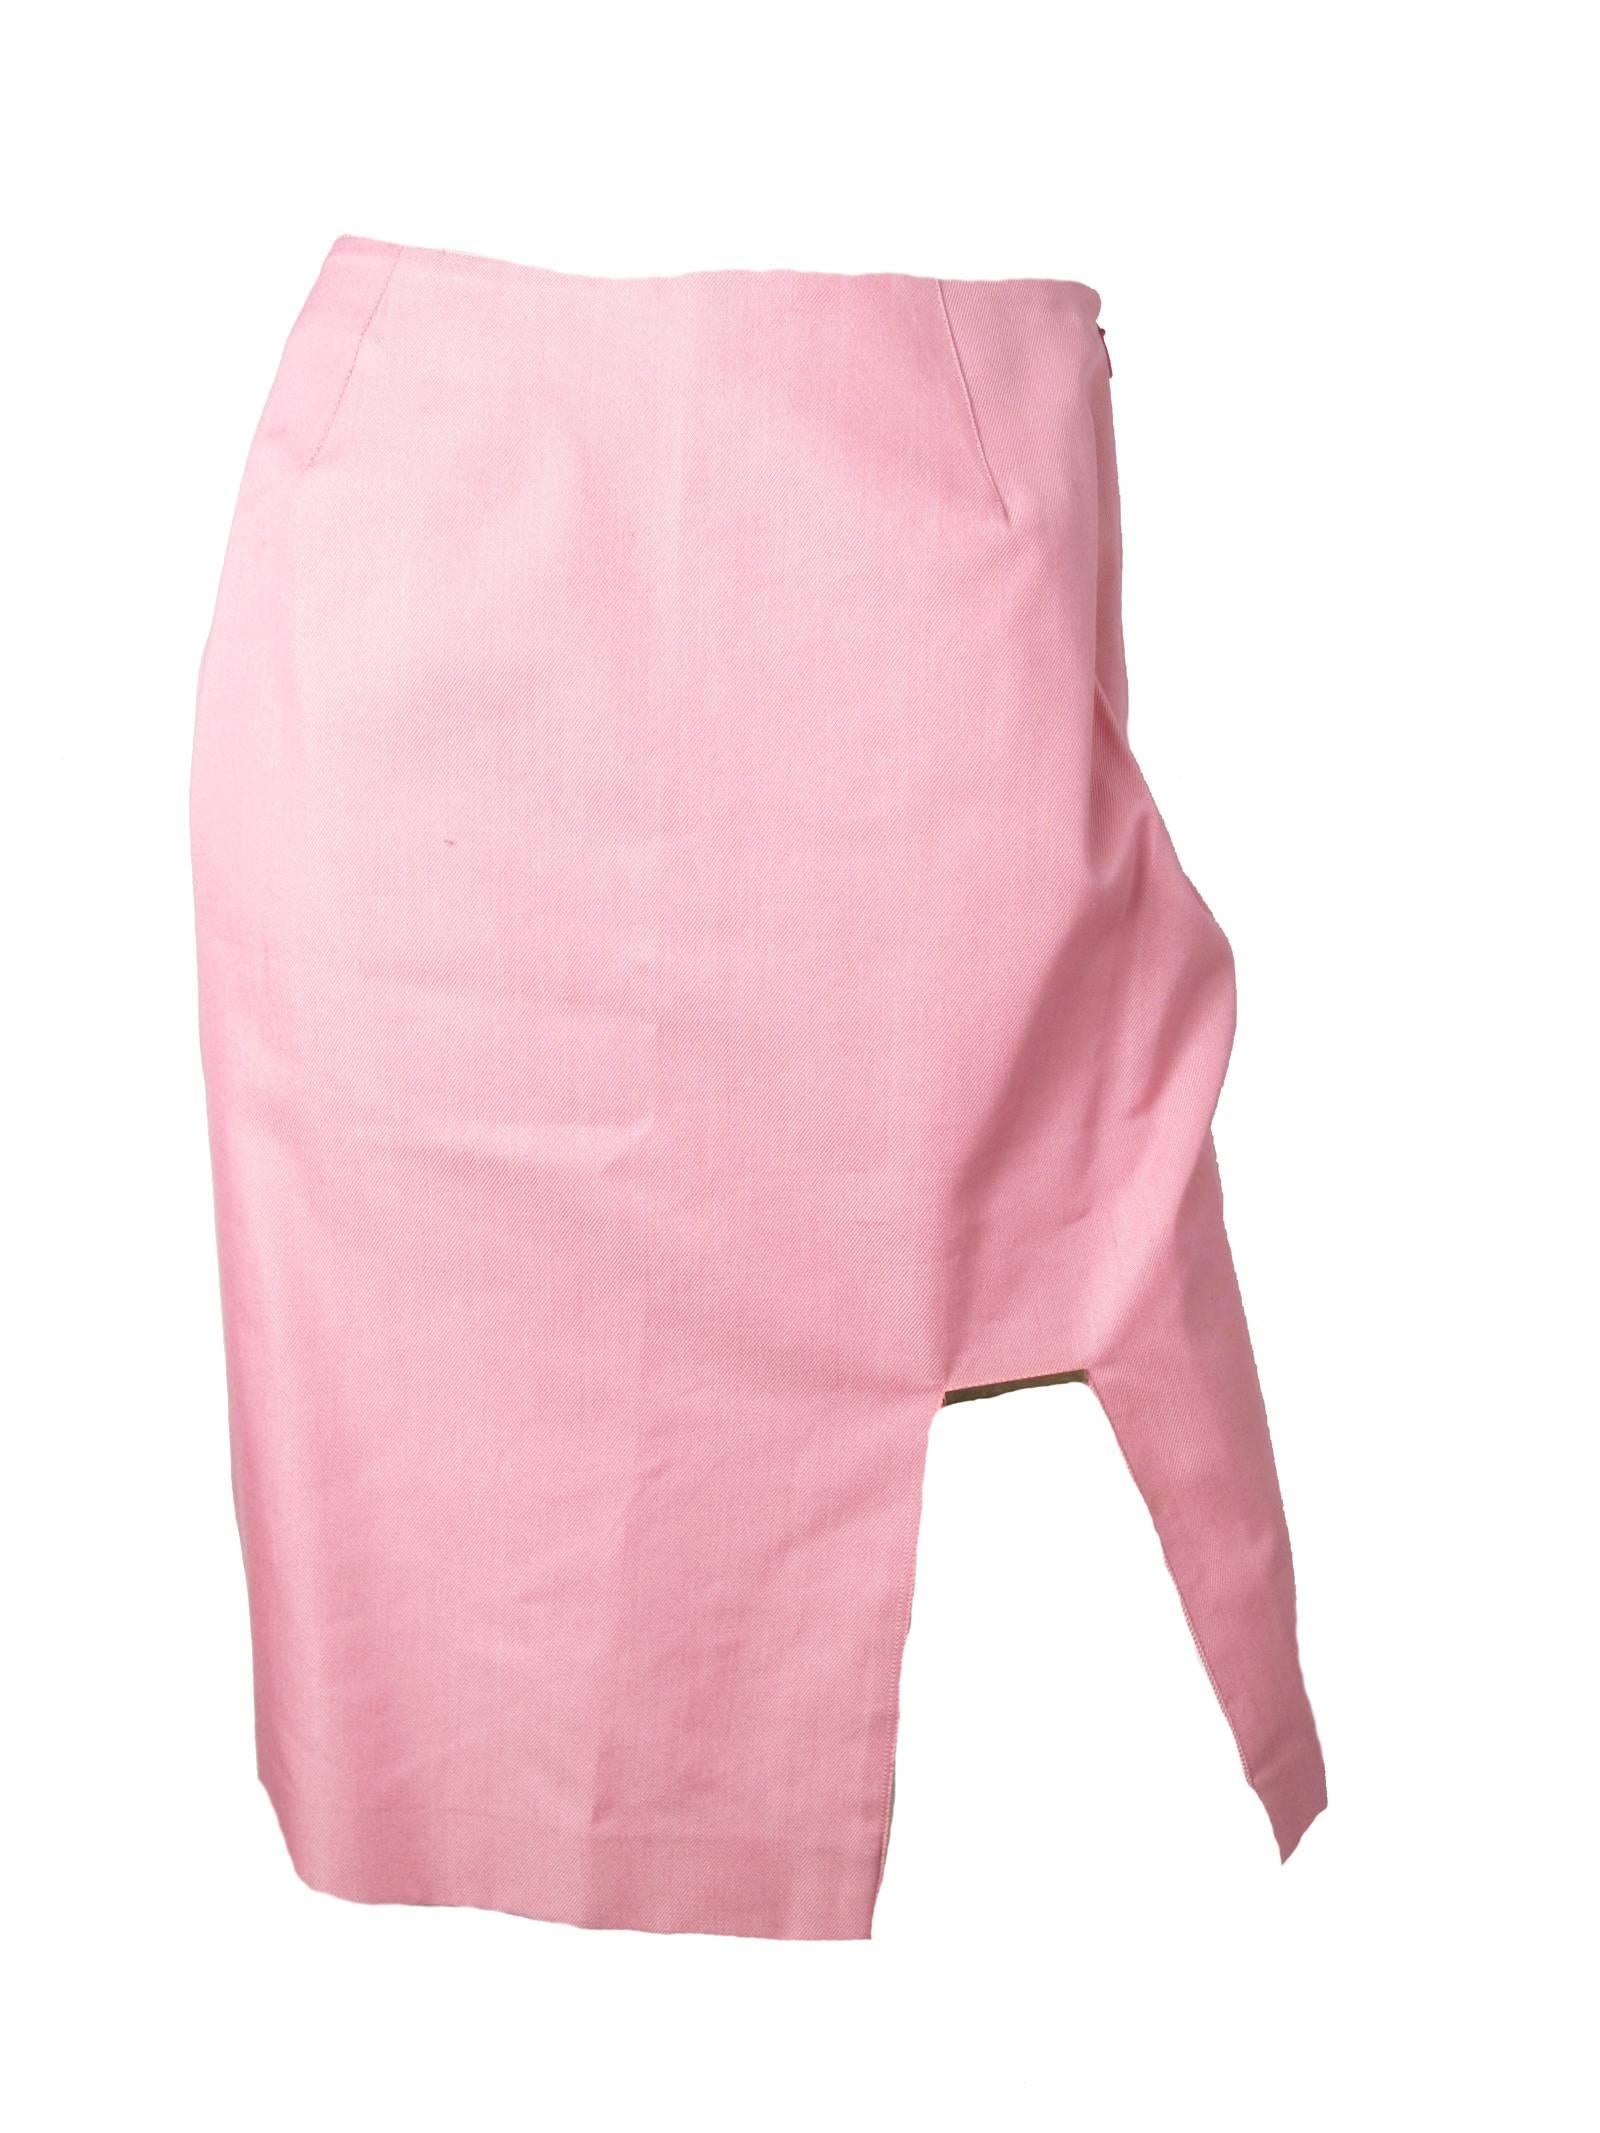 mugler pink dress